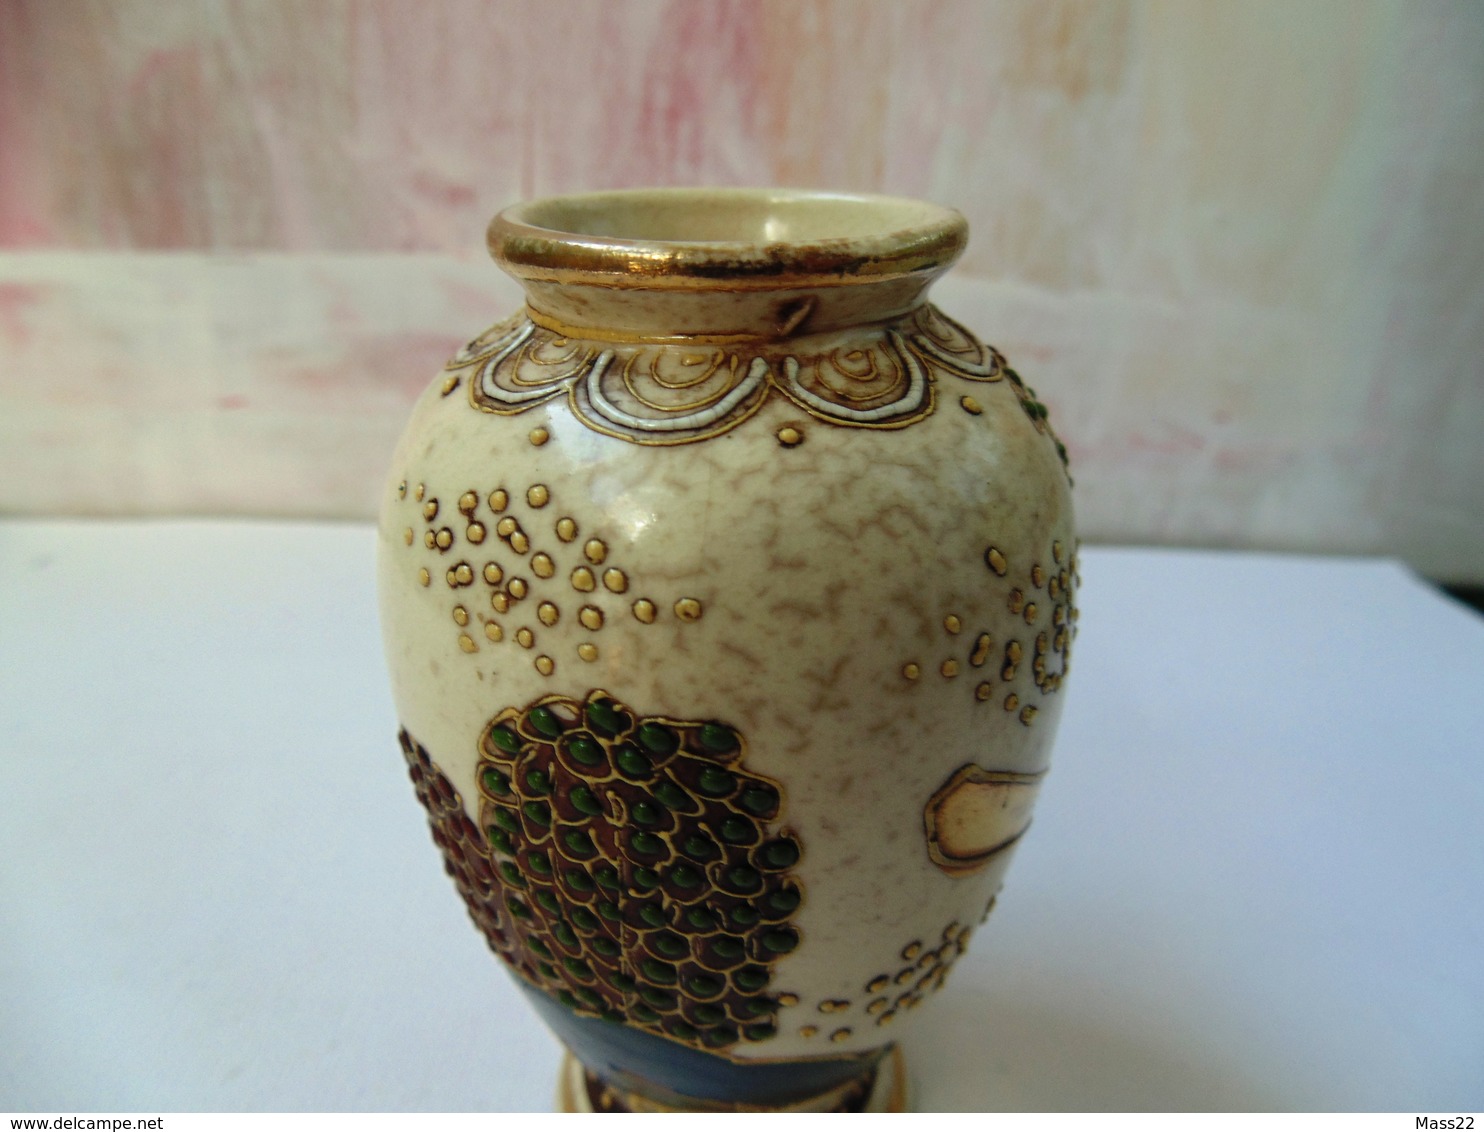 Small Satsuma Japan Vase with Decoration and Stamp in Gold - Kinkozan Tsukuru? Light Damage